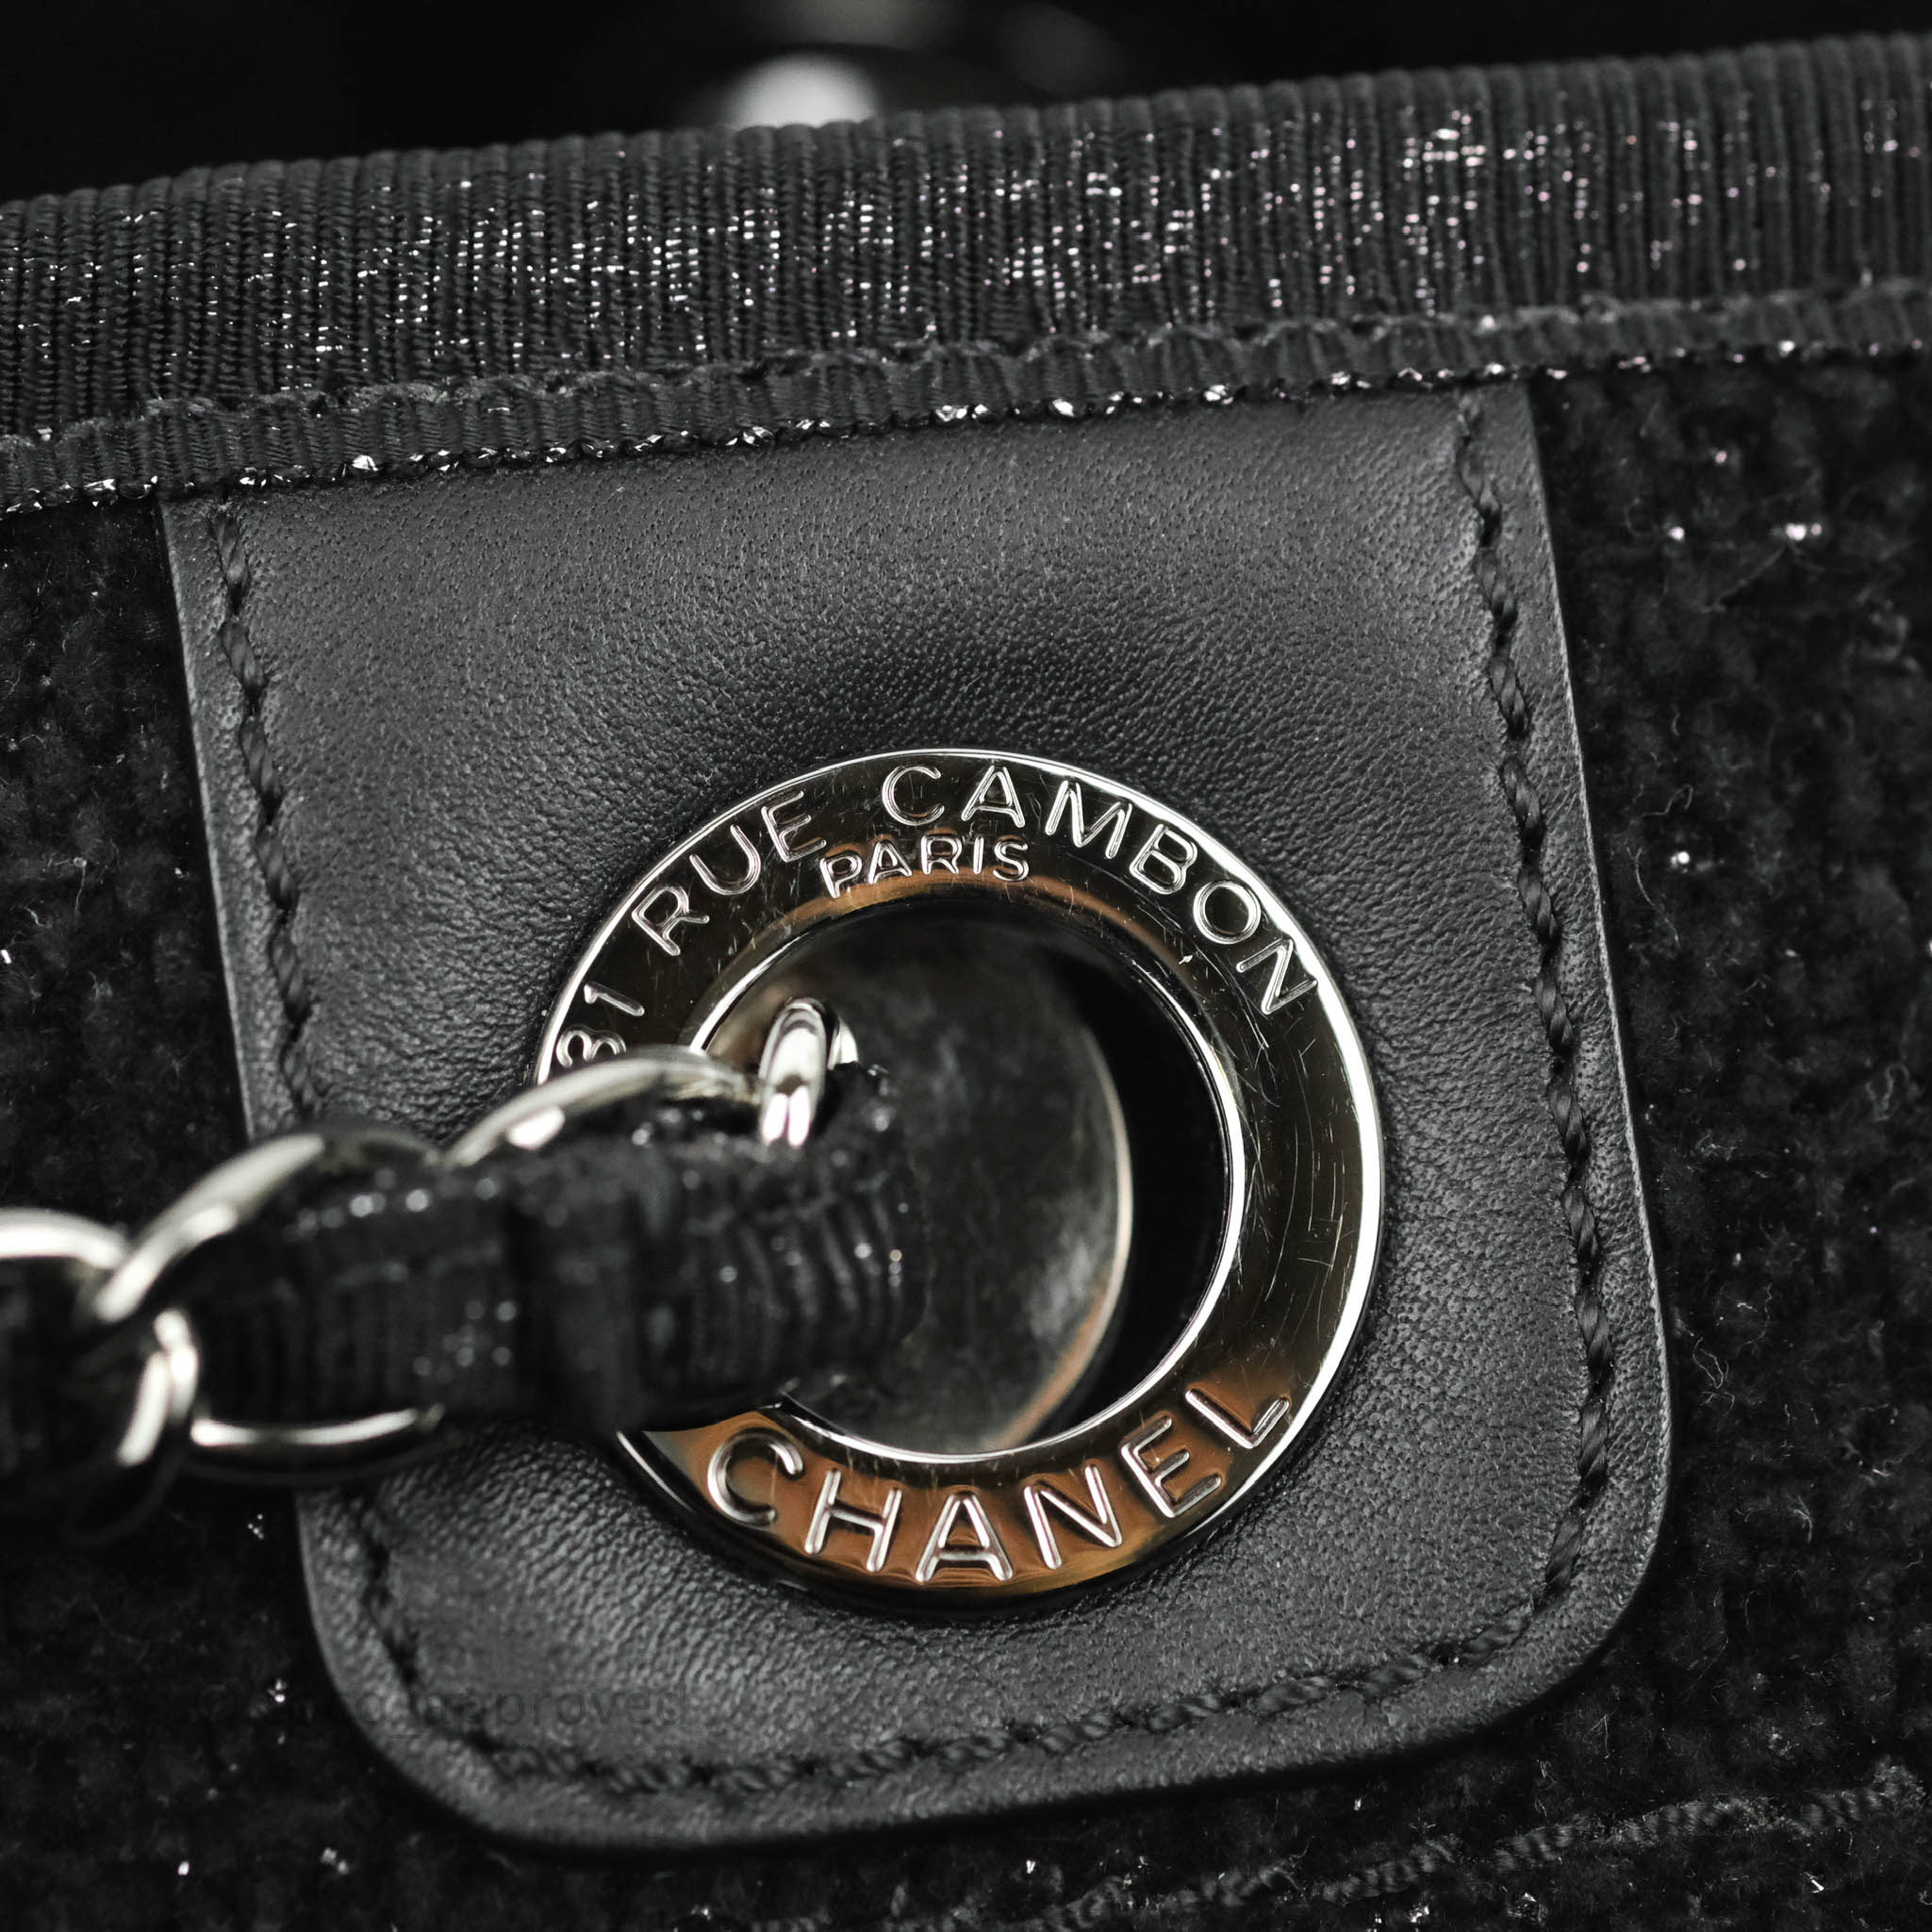 Chanel Medium Deauville Black Glitter Lurex Tote Bag 19A – Coco Approved  Studio